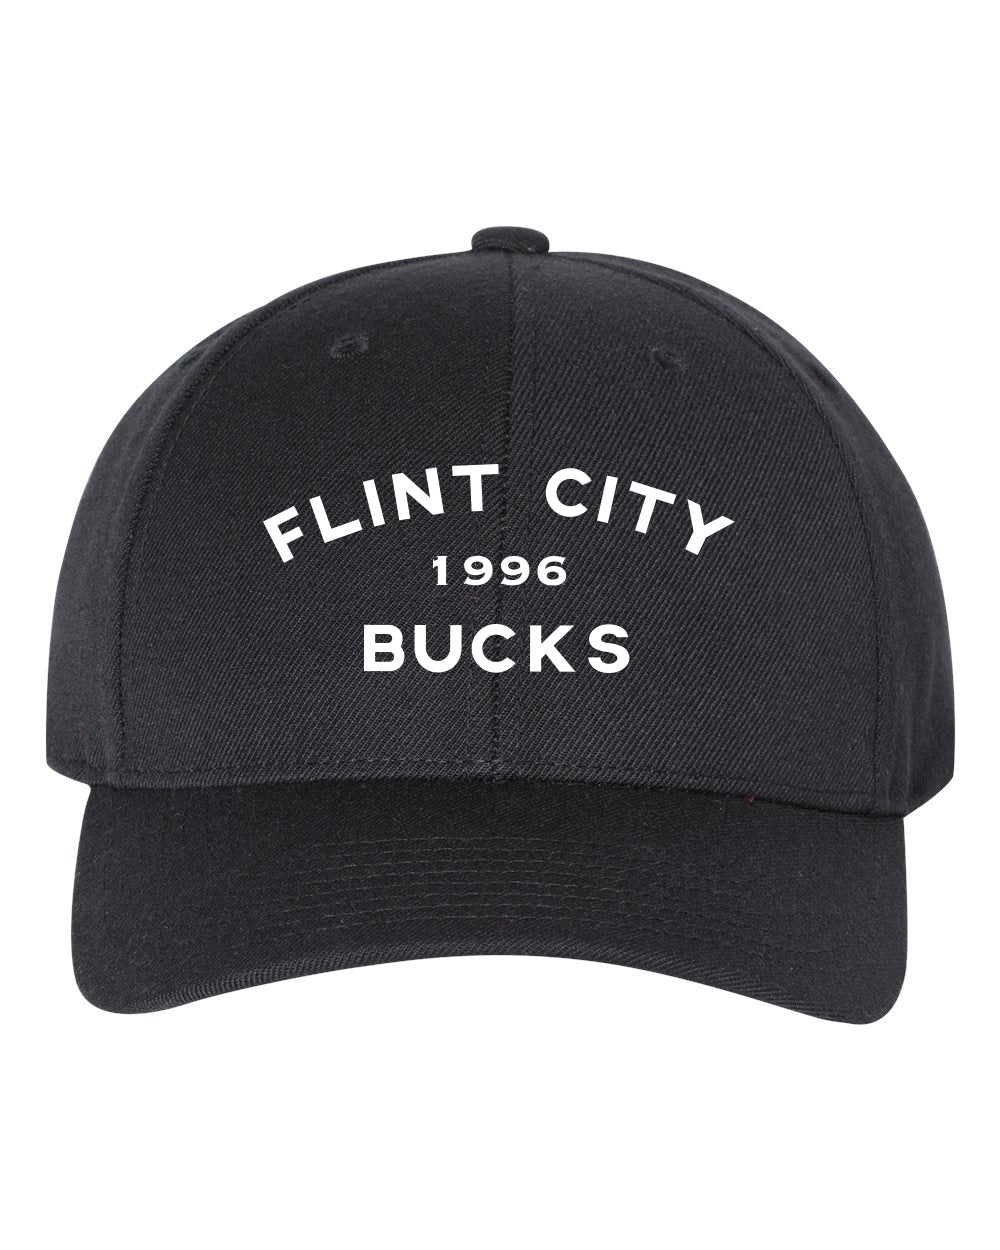 Bucks 1996 Hat